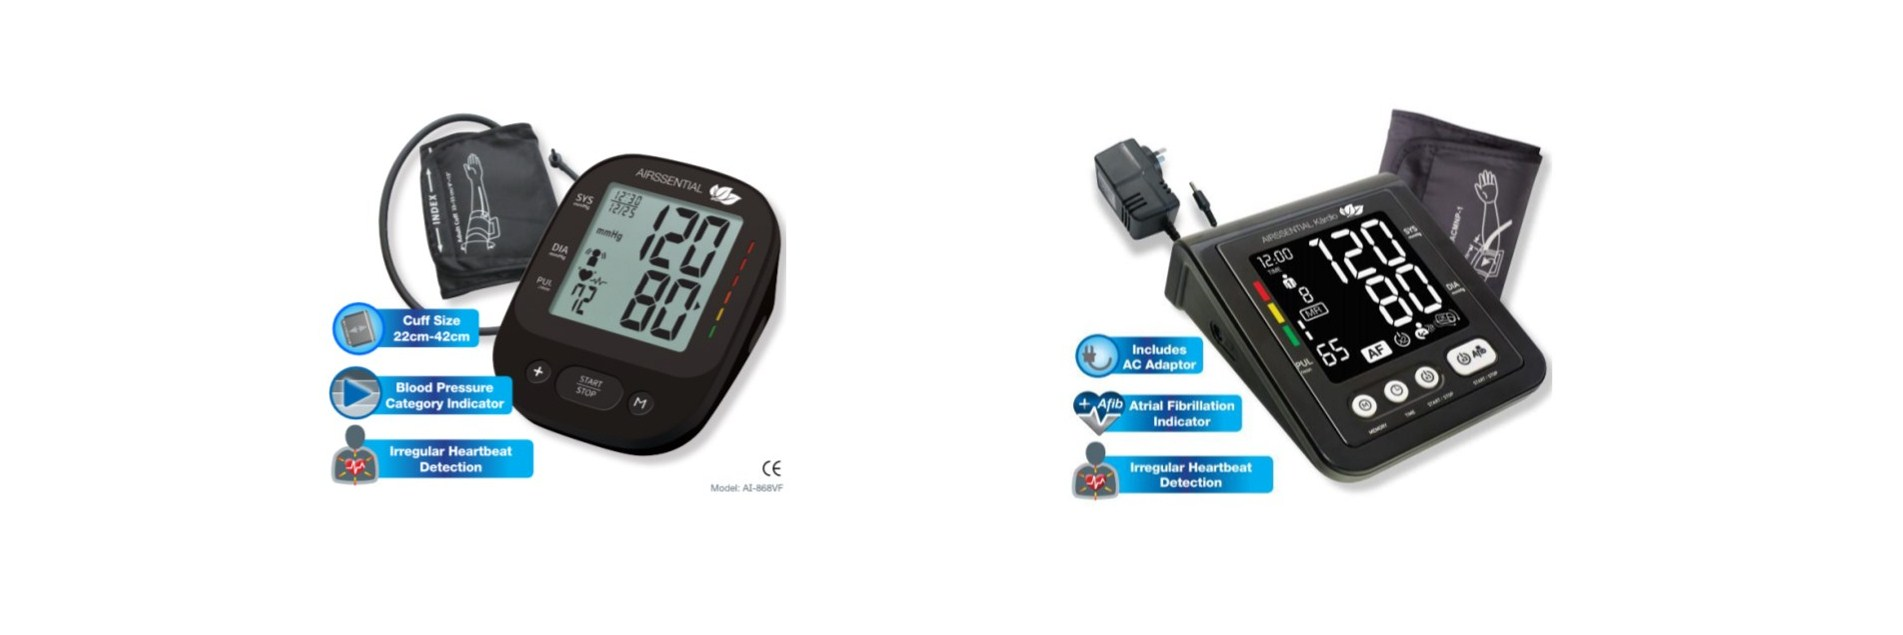 Blood Pressure Monitors - Airssential Health Care